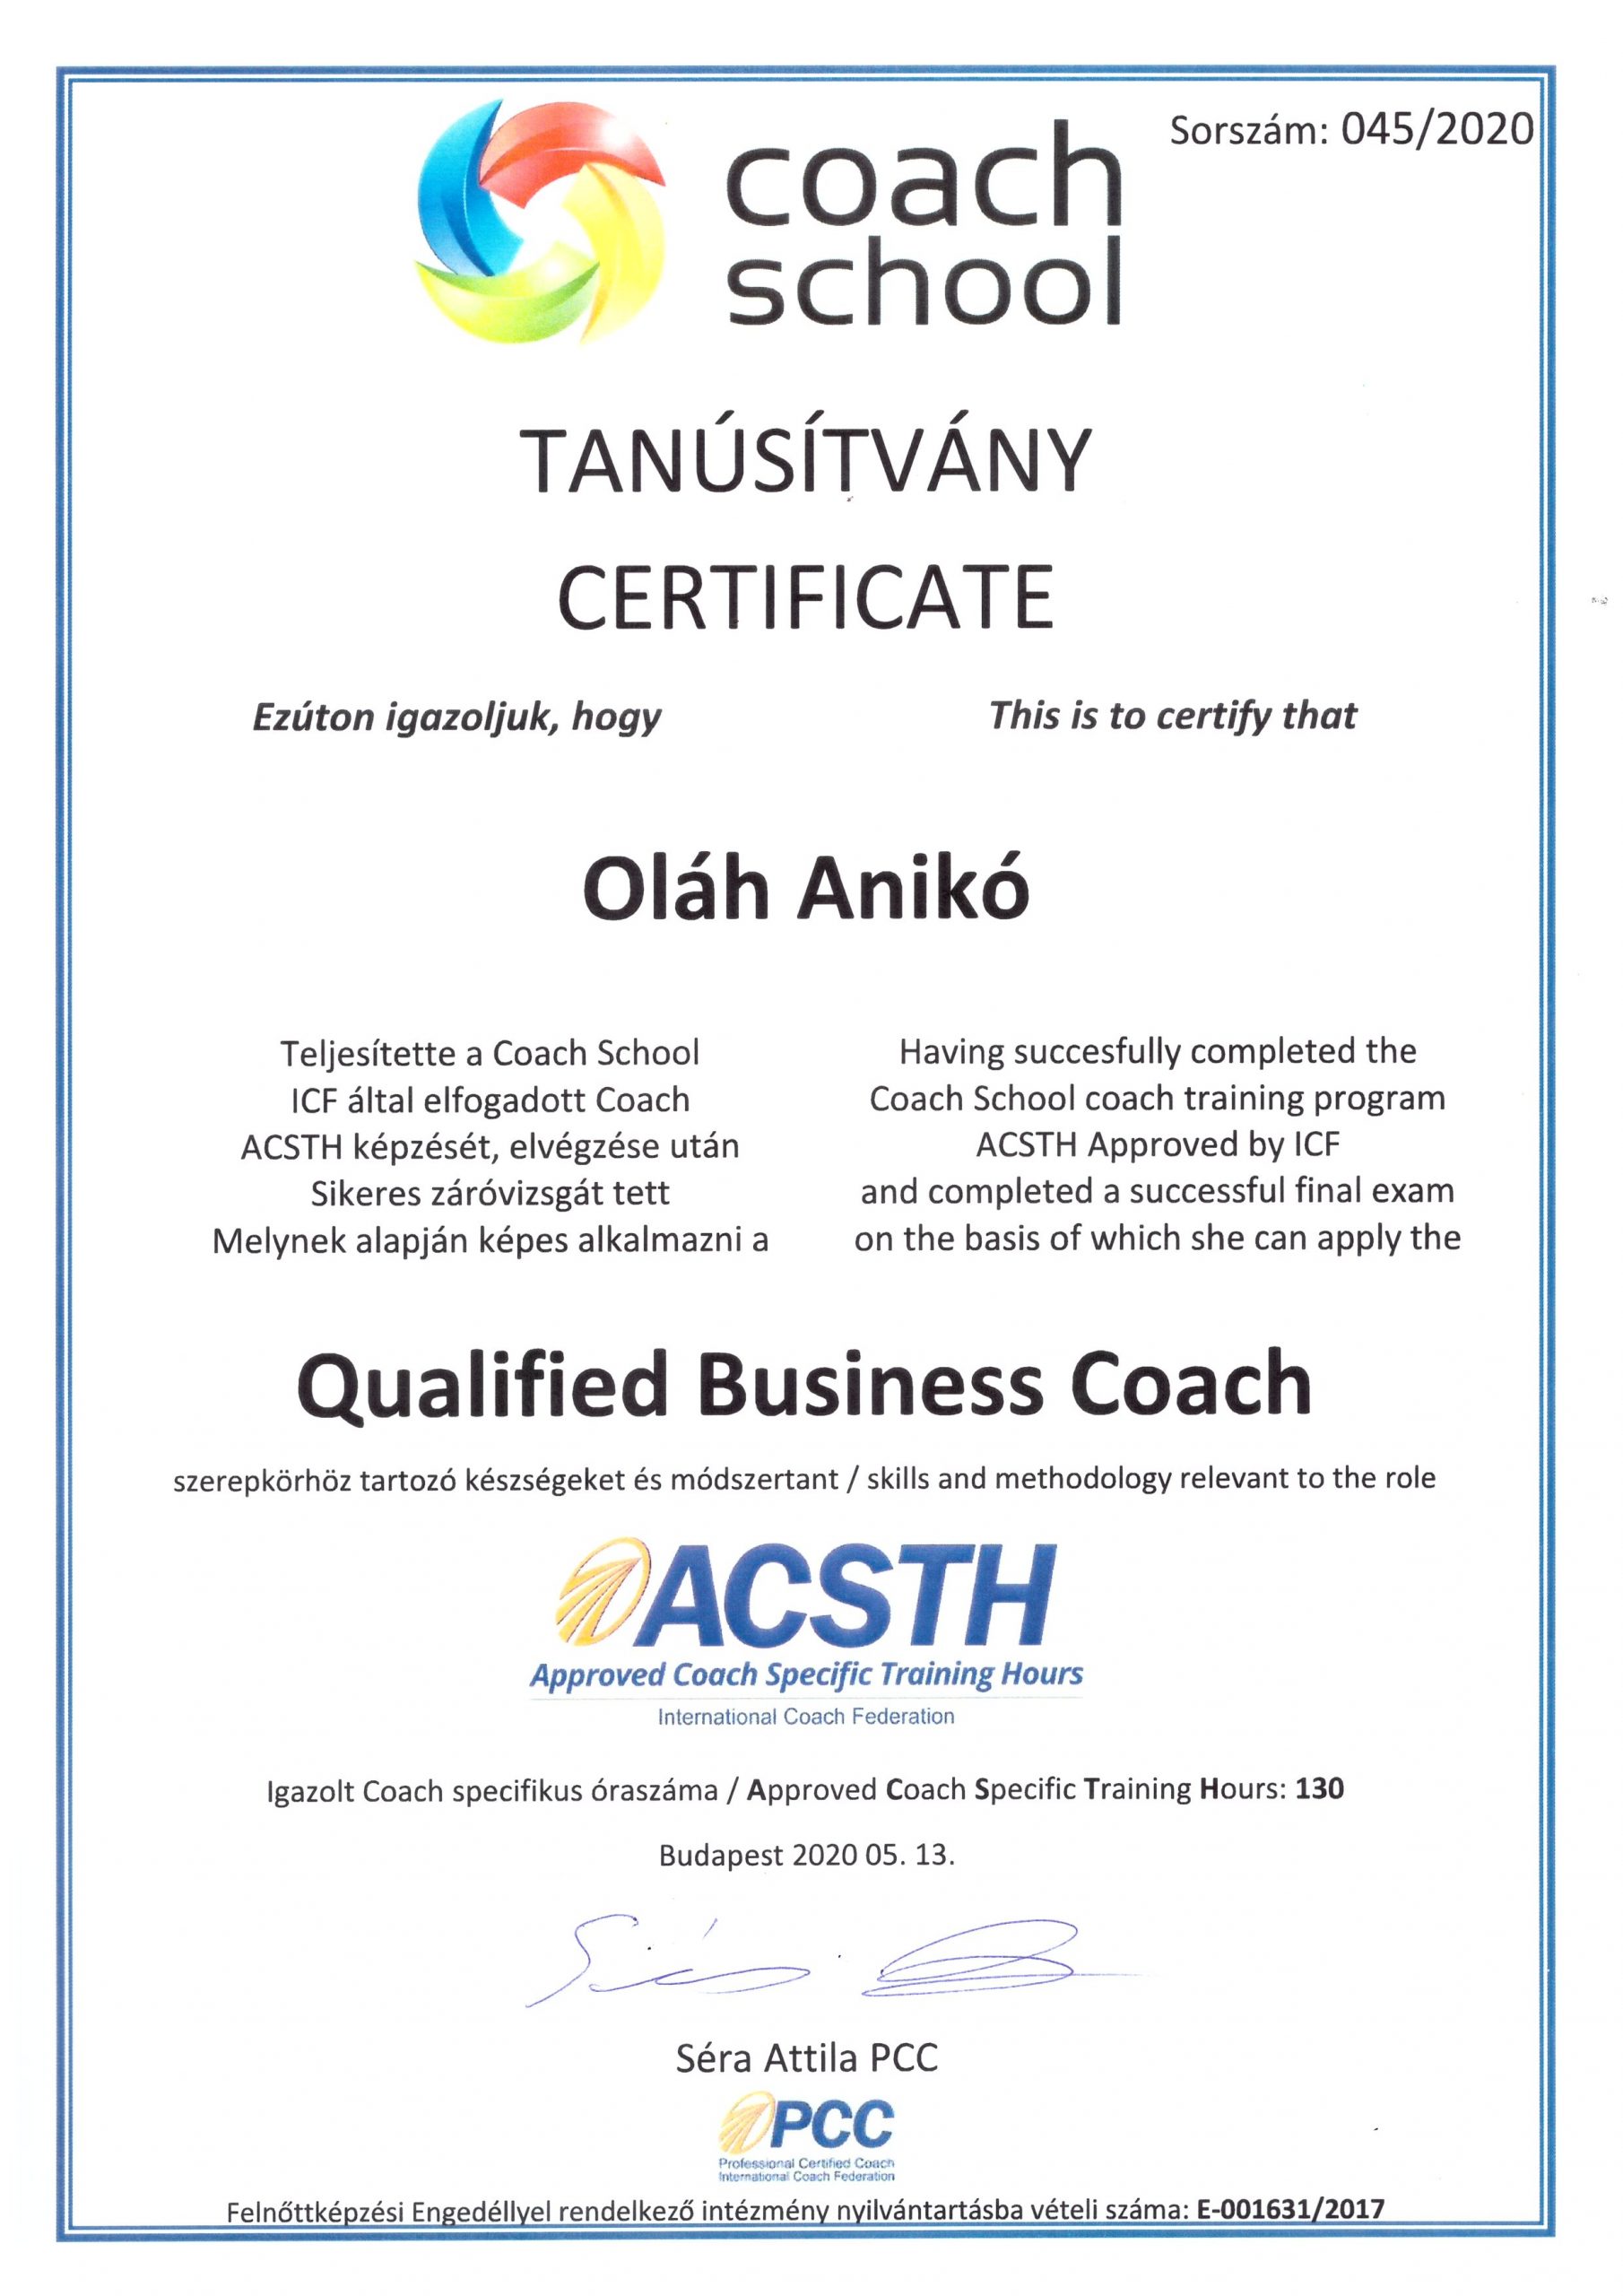 Oláh Anikó ICF accredited qualified business coach